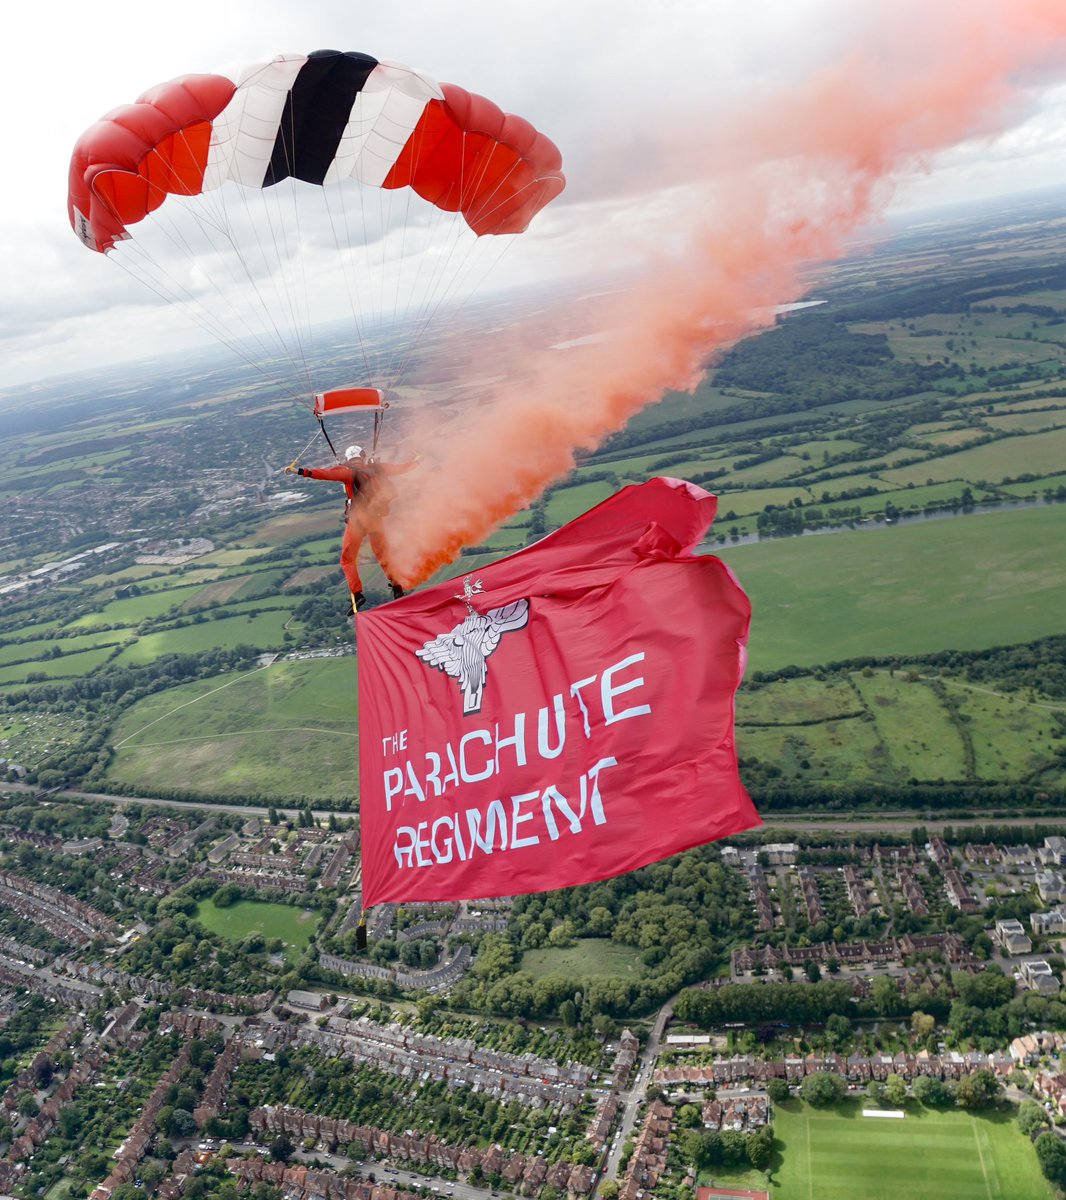 Always proudly flying The Parachute Regiment flag 🪂 @TheParachuteReg